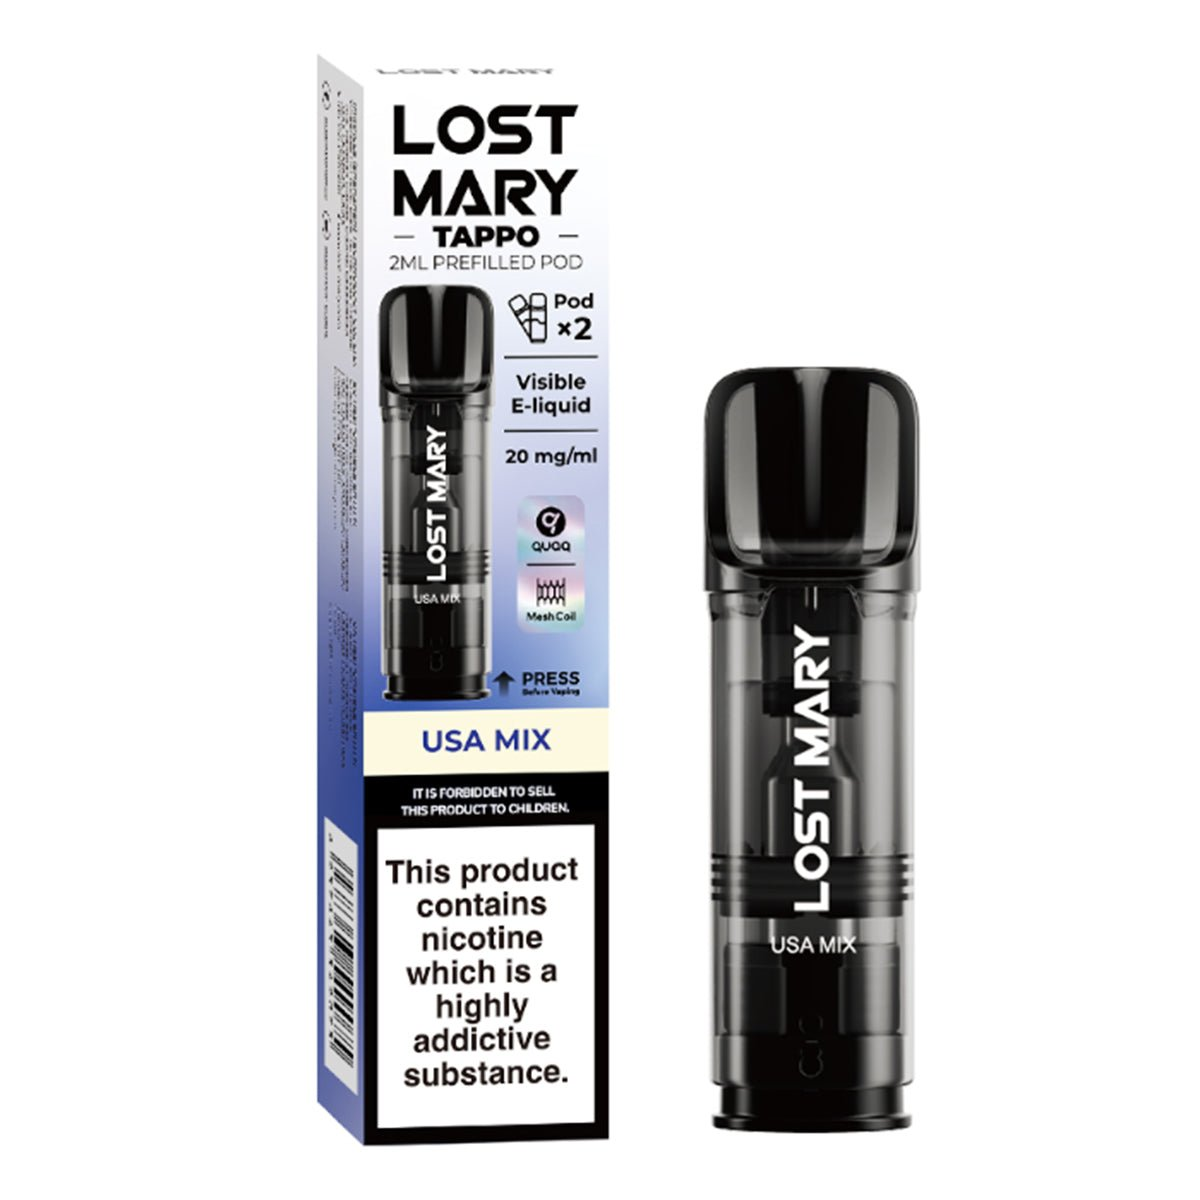 USA Mix Tappo Pre-filled Pod by Lost Mary - Manabush Eliquid - Tobacco E-liquid and Vape Juice